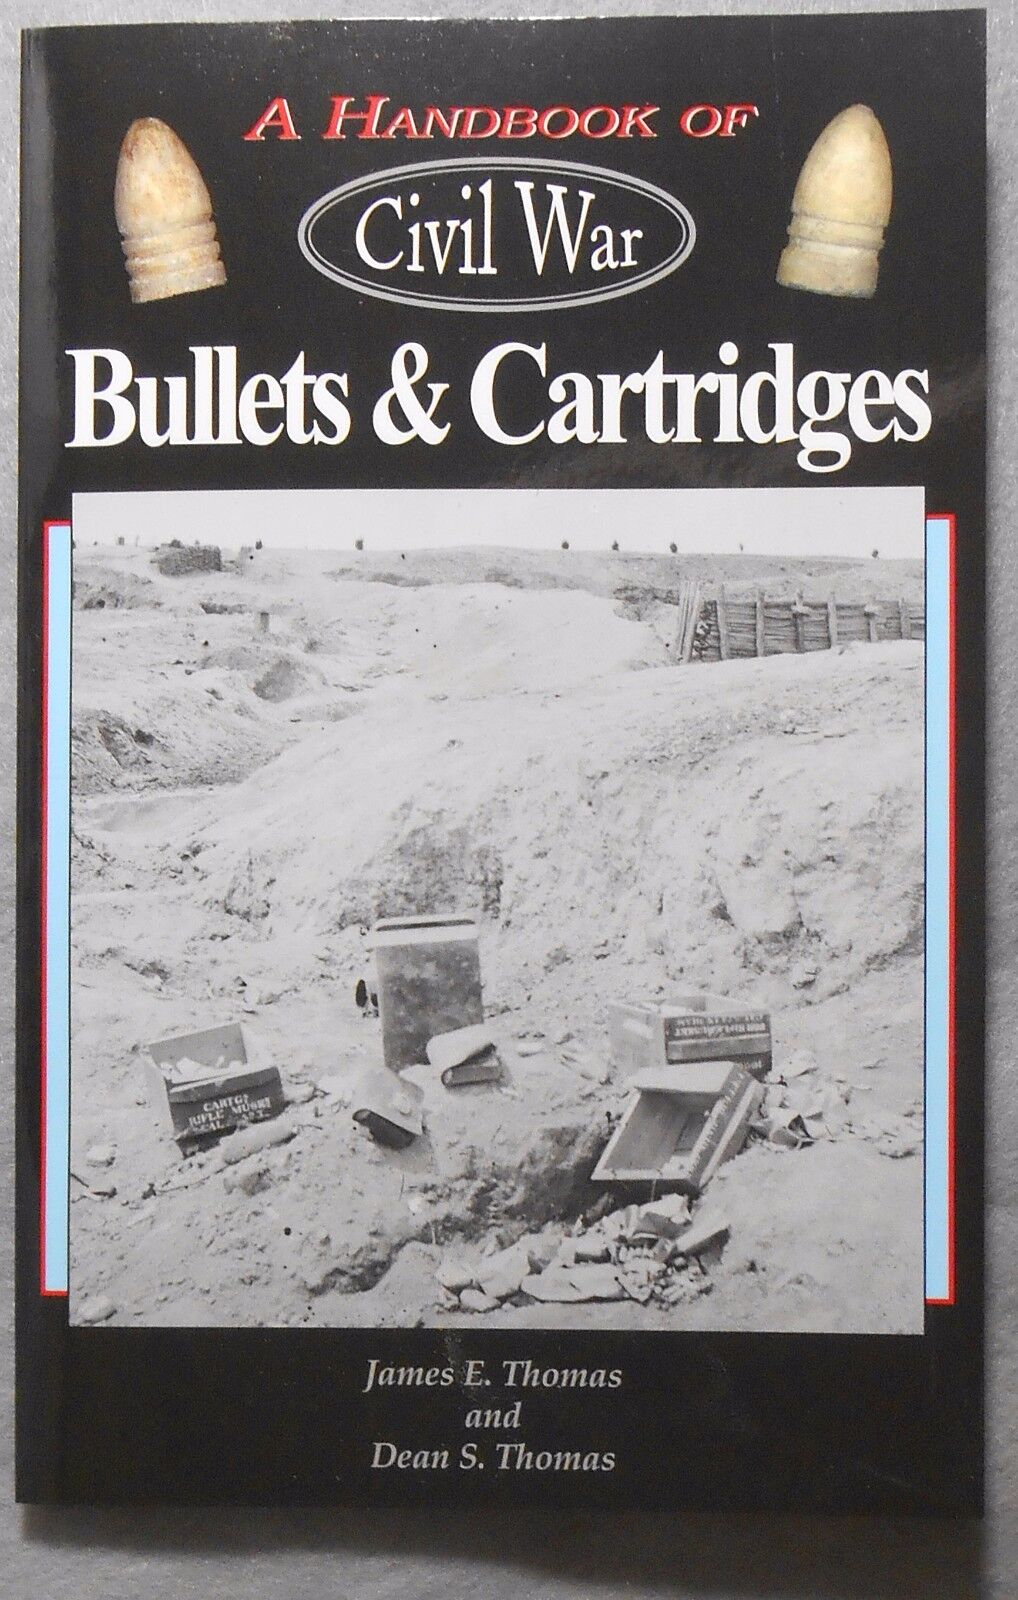 A Handbook of Civil War Bullets & Cartridges, By James E. and Dean S. Thomas